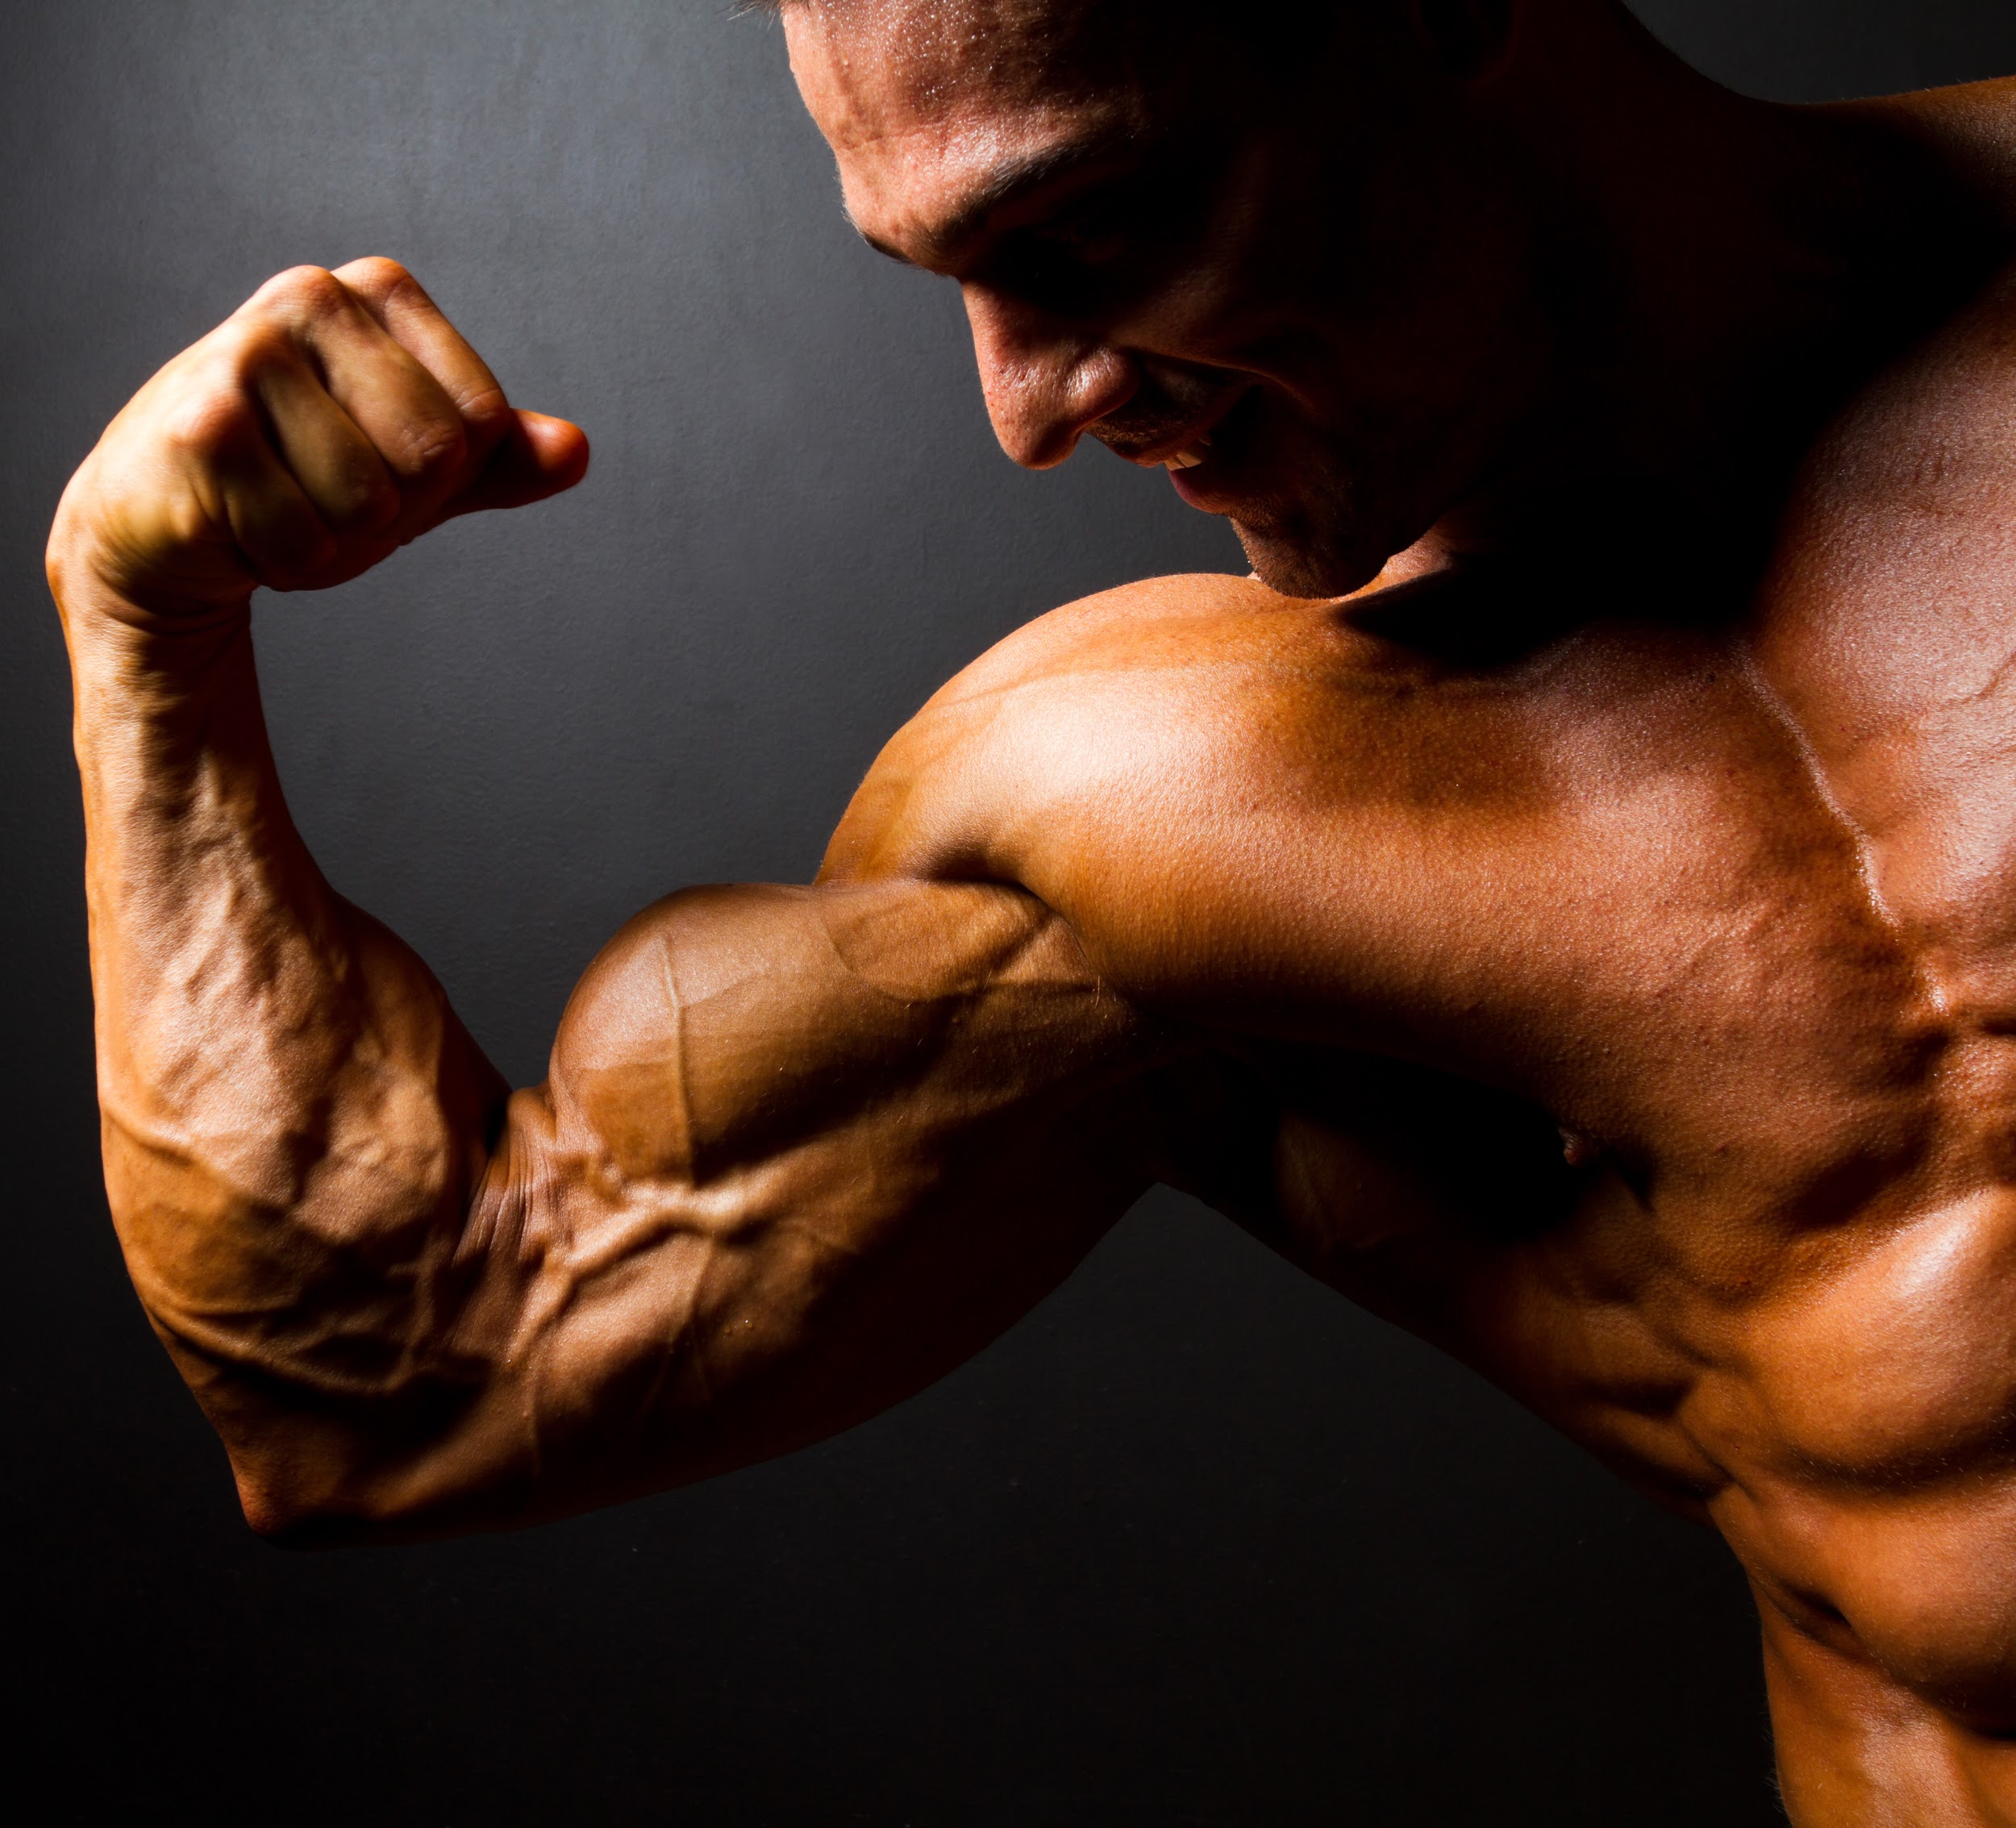 strong bodybuilder posing on black background